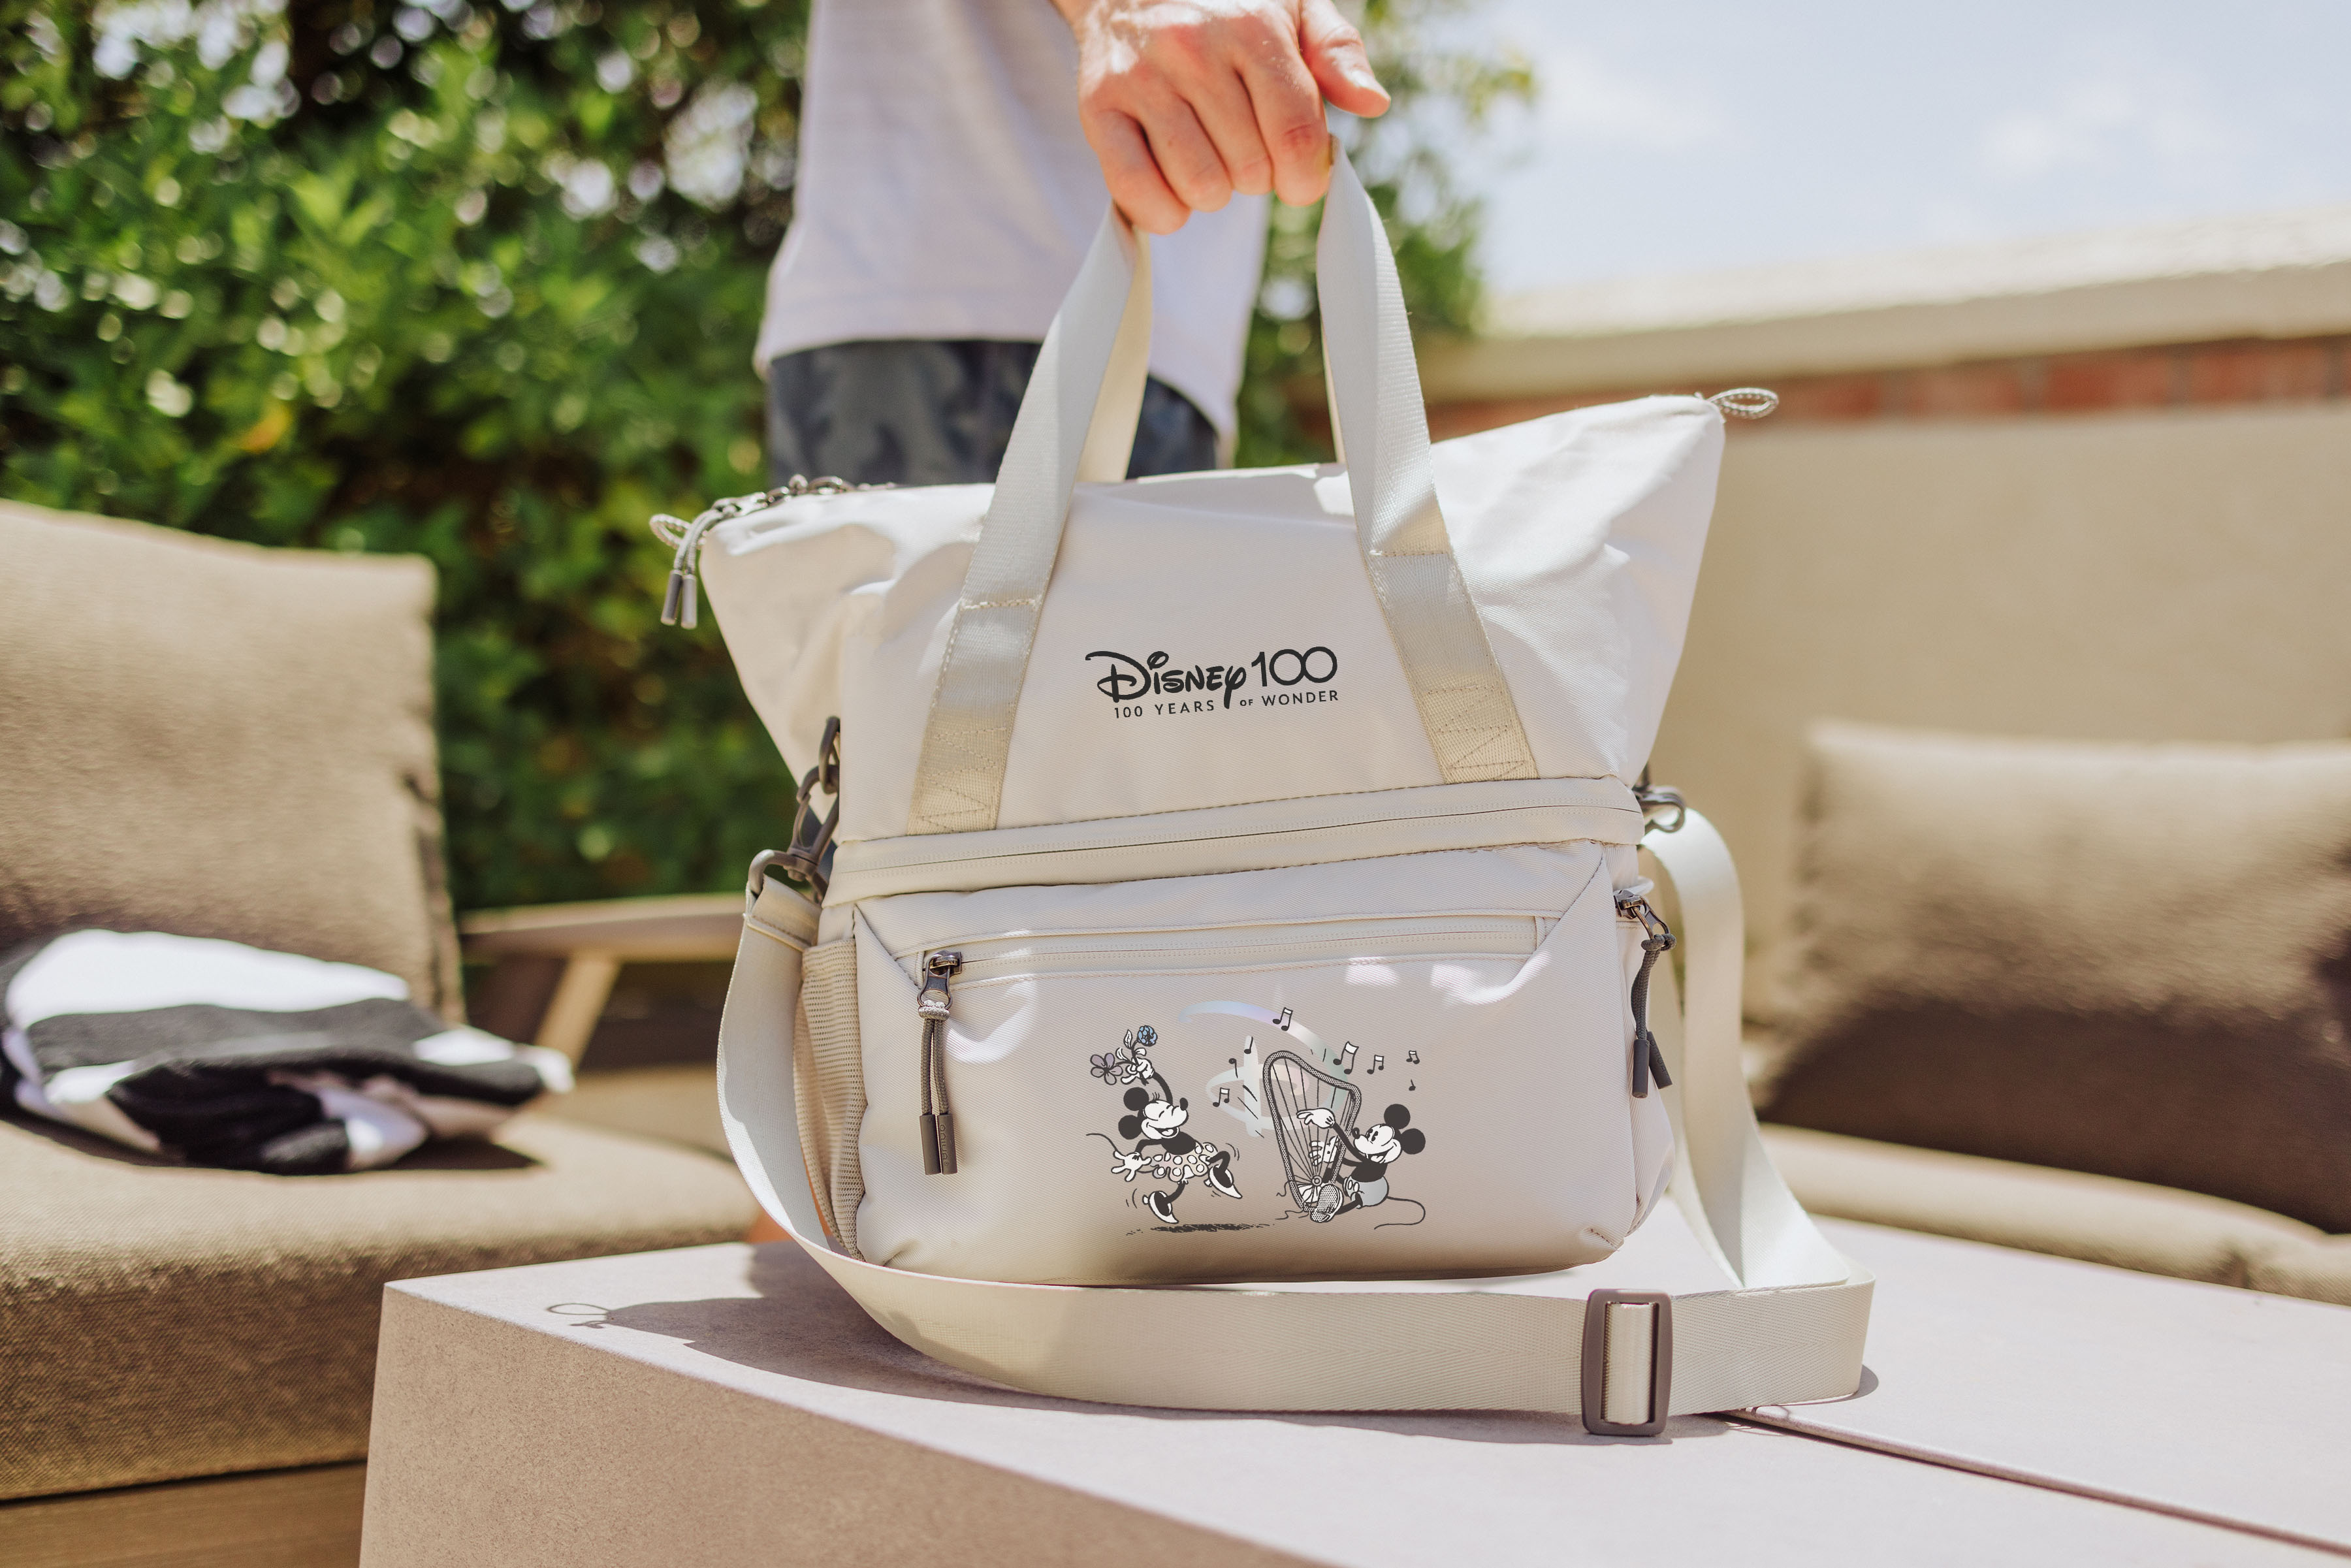 Disney 100 - Tarana Lunch Bag Cooler with Utensils